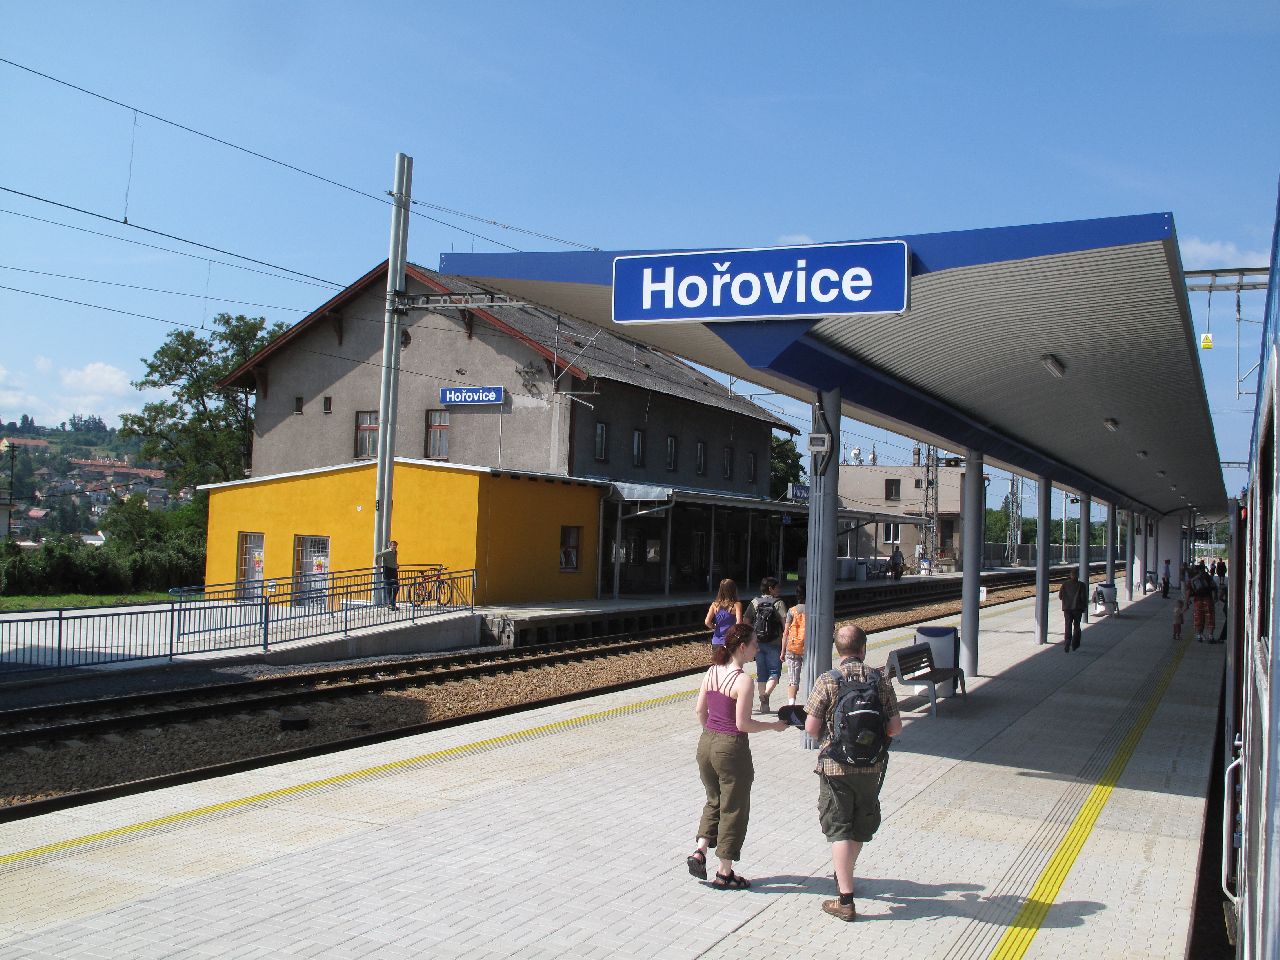 Stanice Hořovice. Foto: Dezidor / Wikimedia Commons